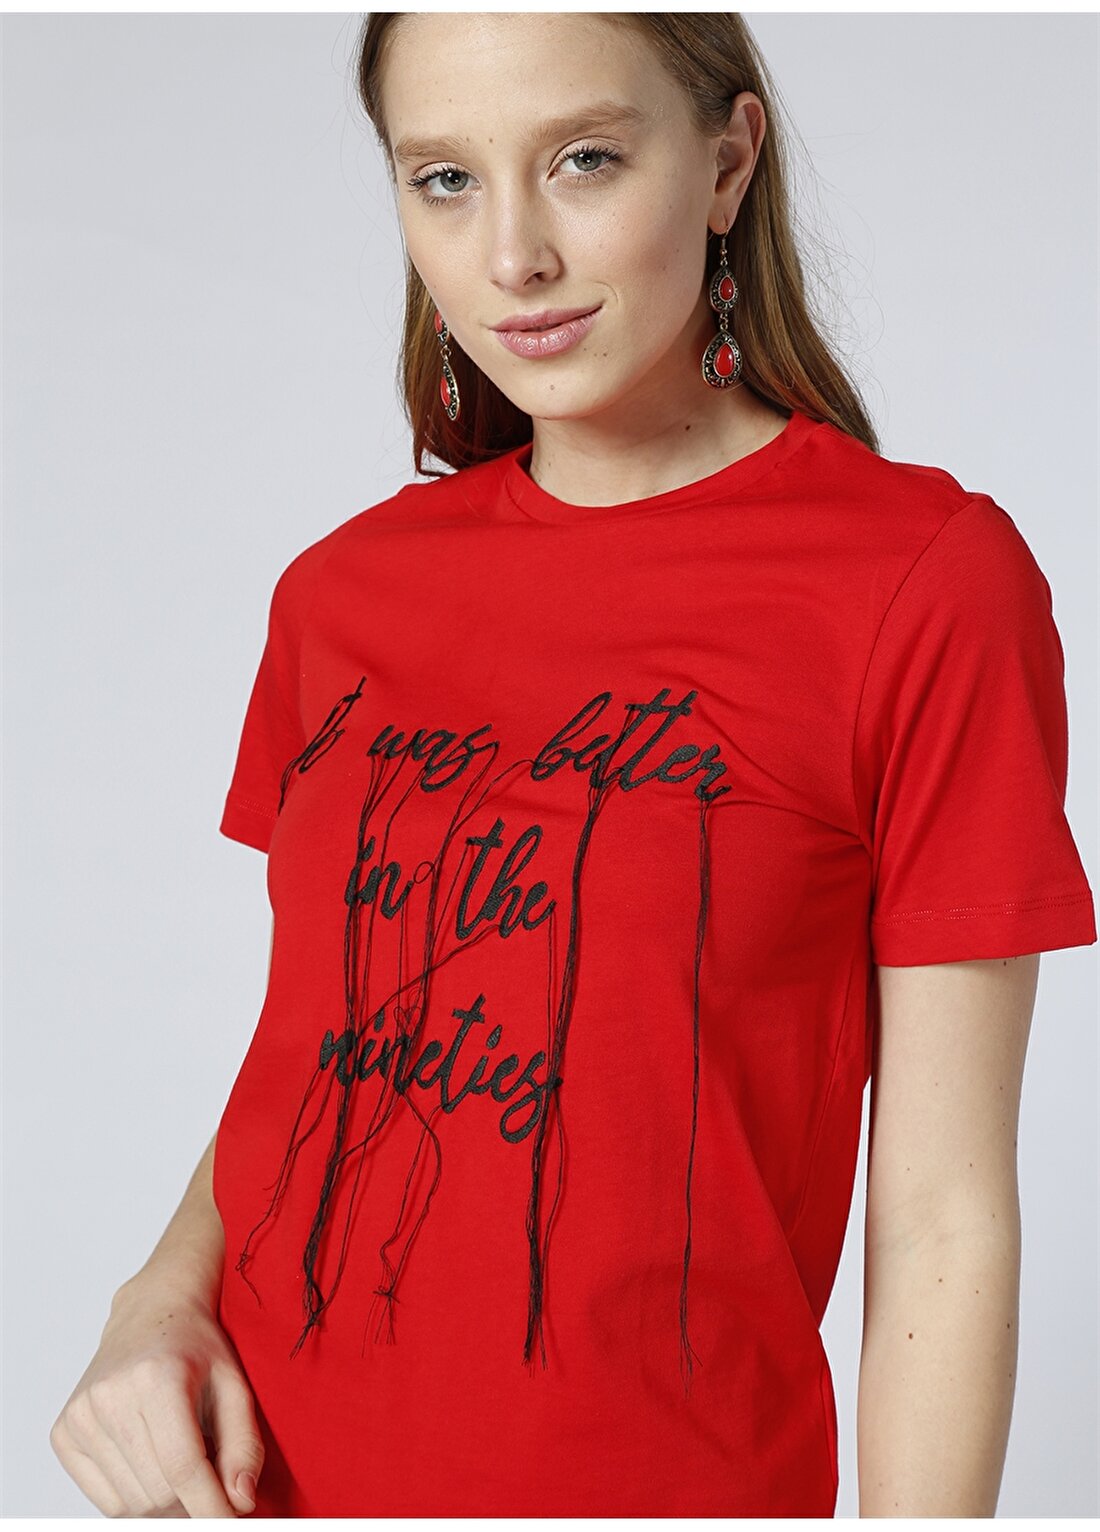 Black Pepper Yazılı Kırmızı T-Shirt